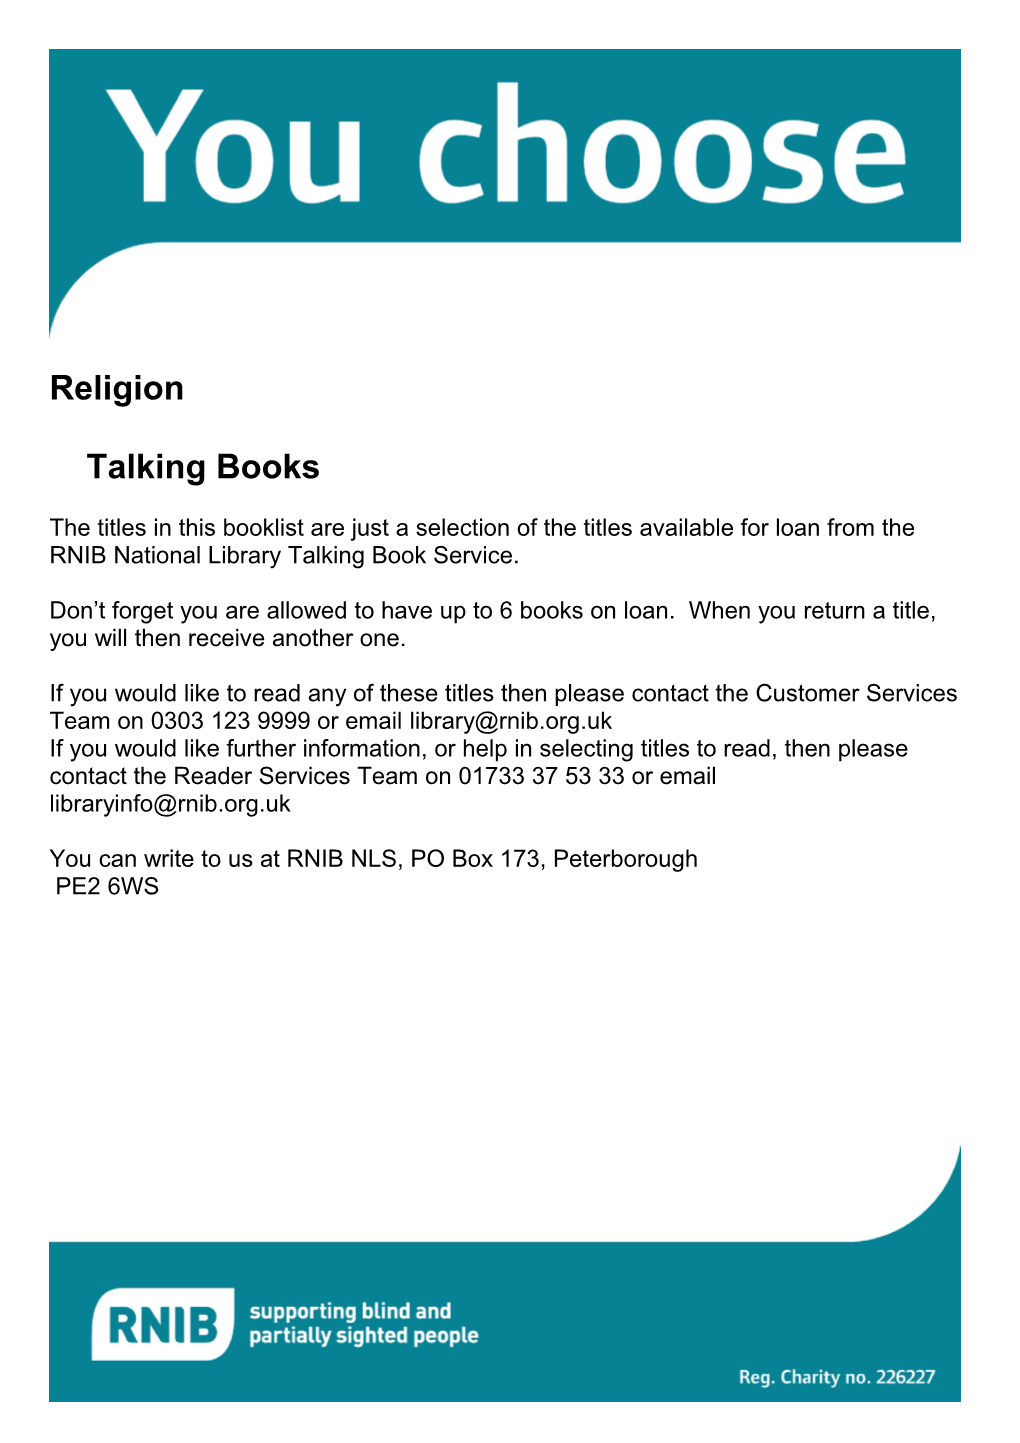 Religion Book List (Talking Books)